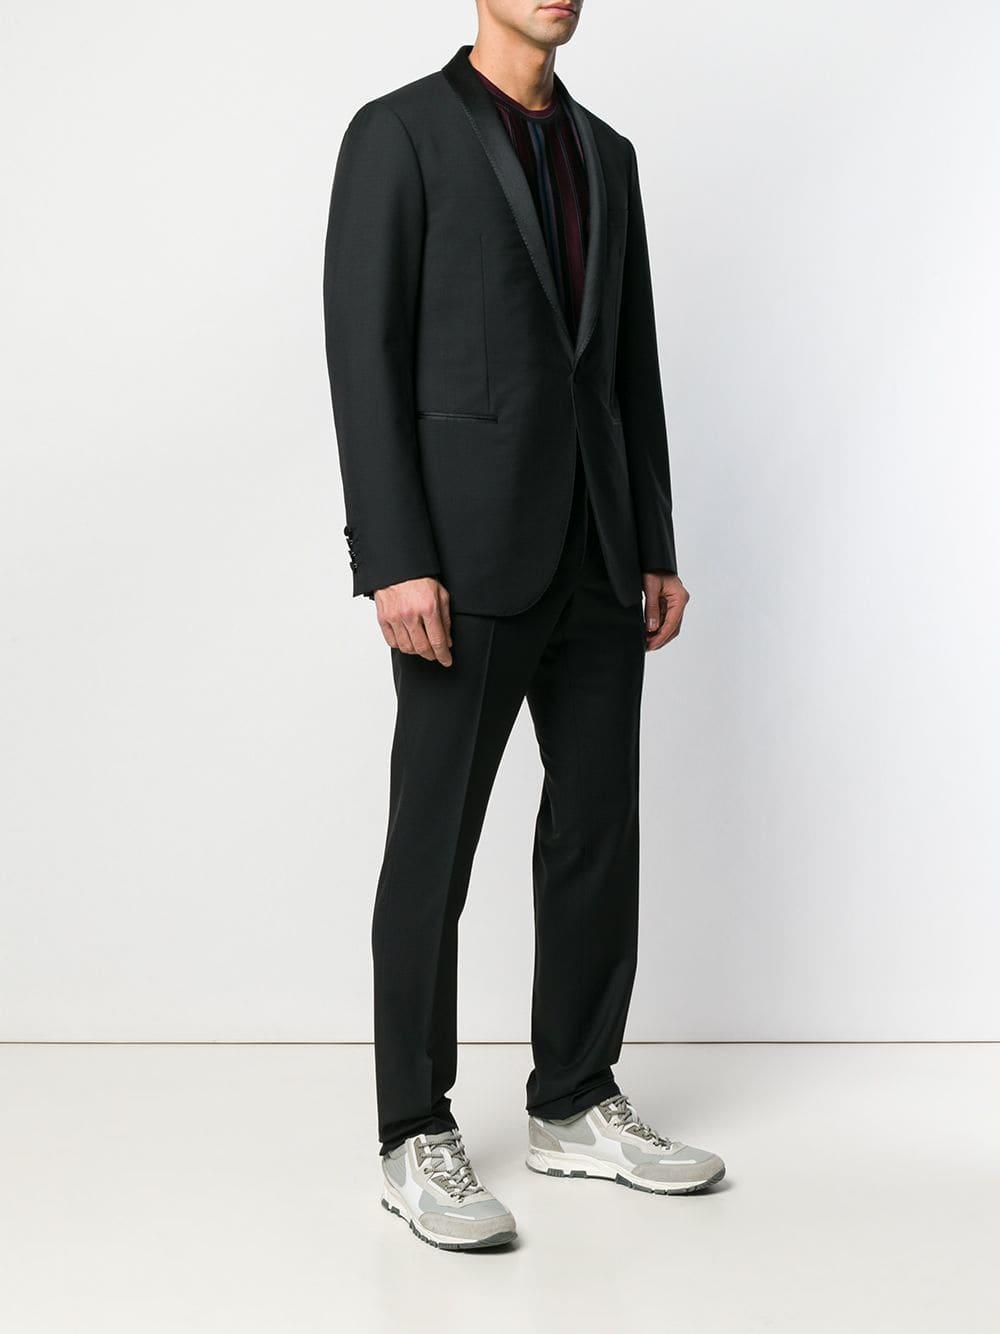 Lanvin Wool Two Piece Dinner Suit in Black for Men - Lyst